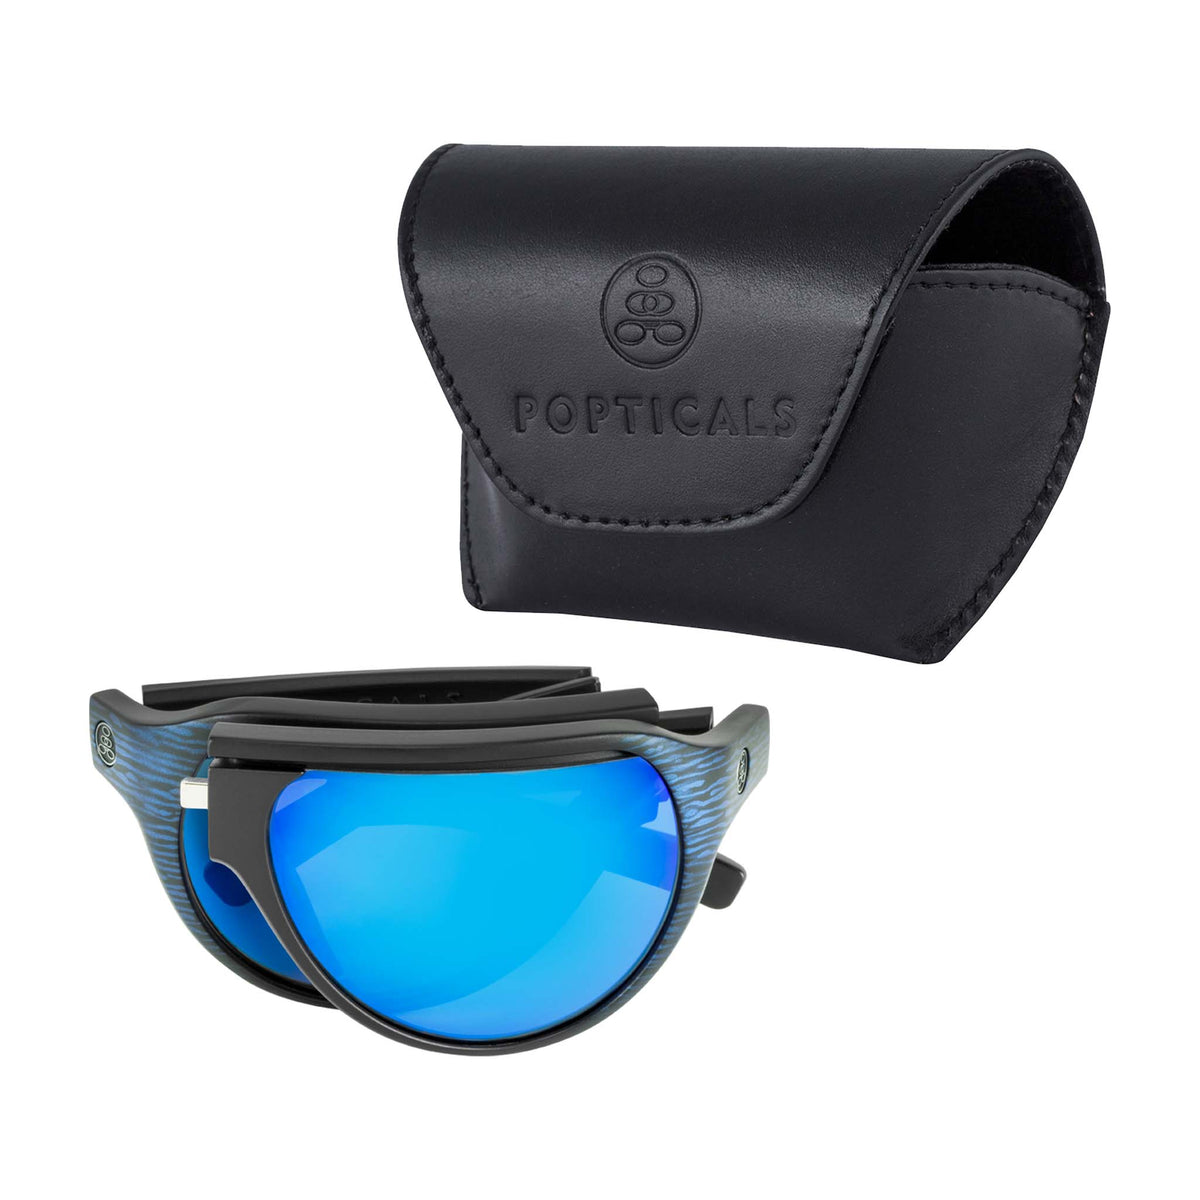 Popticals, Premium Compact Sunglasses, PopAir, 300010-EUUN, Polarized Sunglasses, Matte Blue/Black Wood Grain Frame, Blue Mirror Lenses, Case View